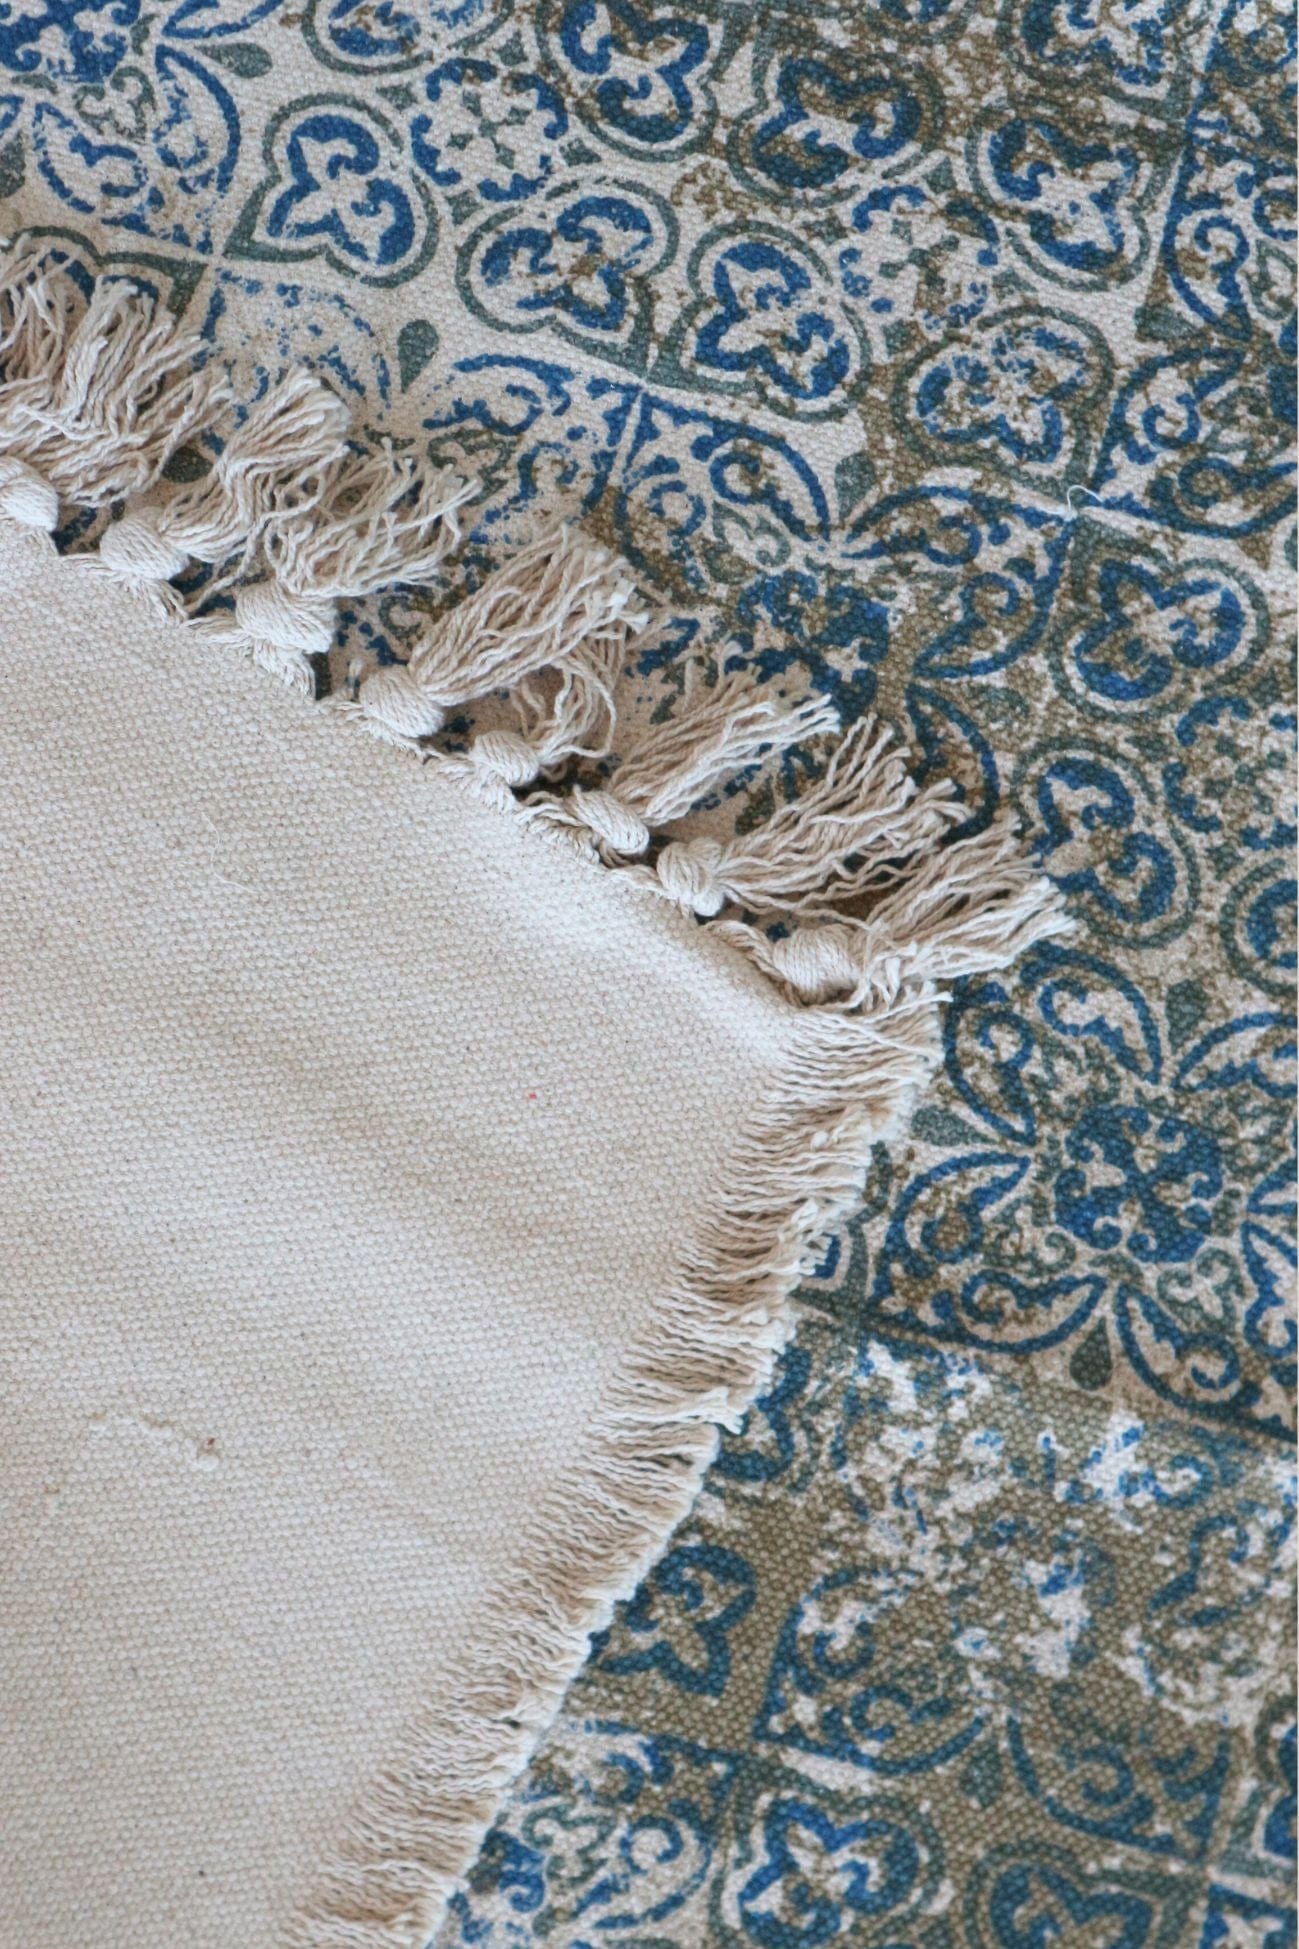 Item International Qanat Qanat - Tappeto in cotone anticato con azulei 120x180 | Item International